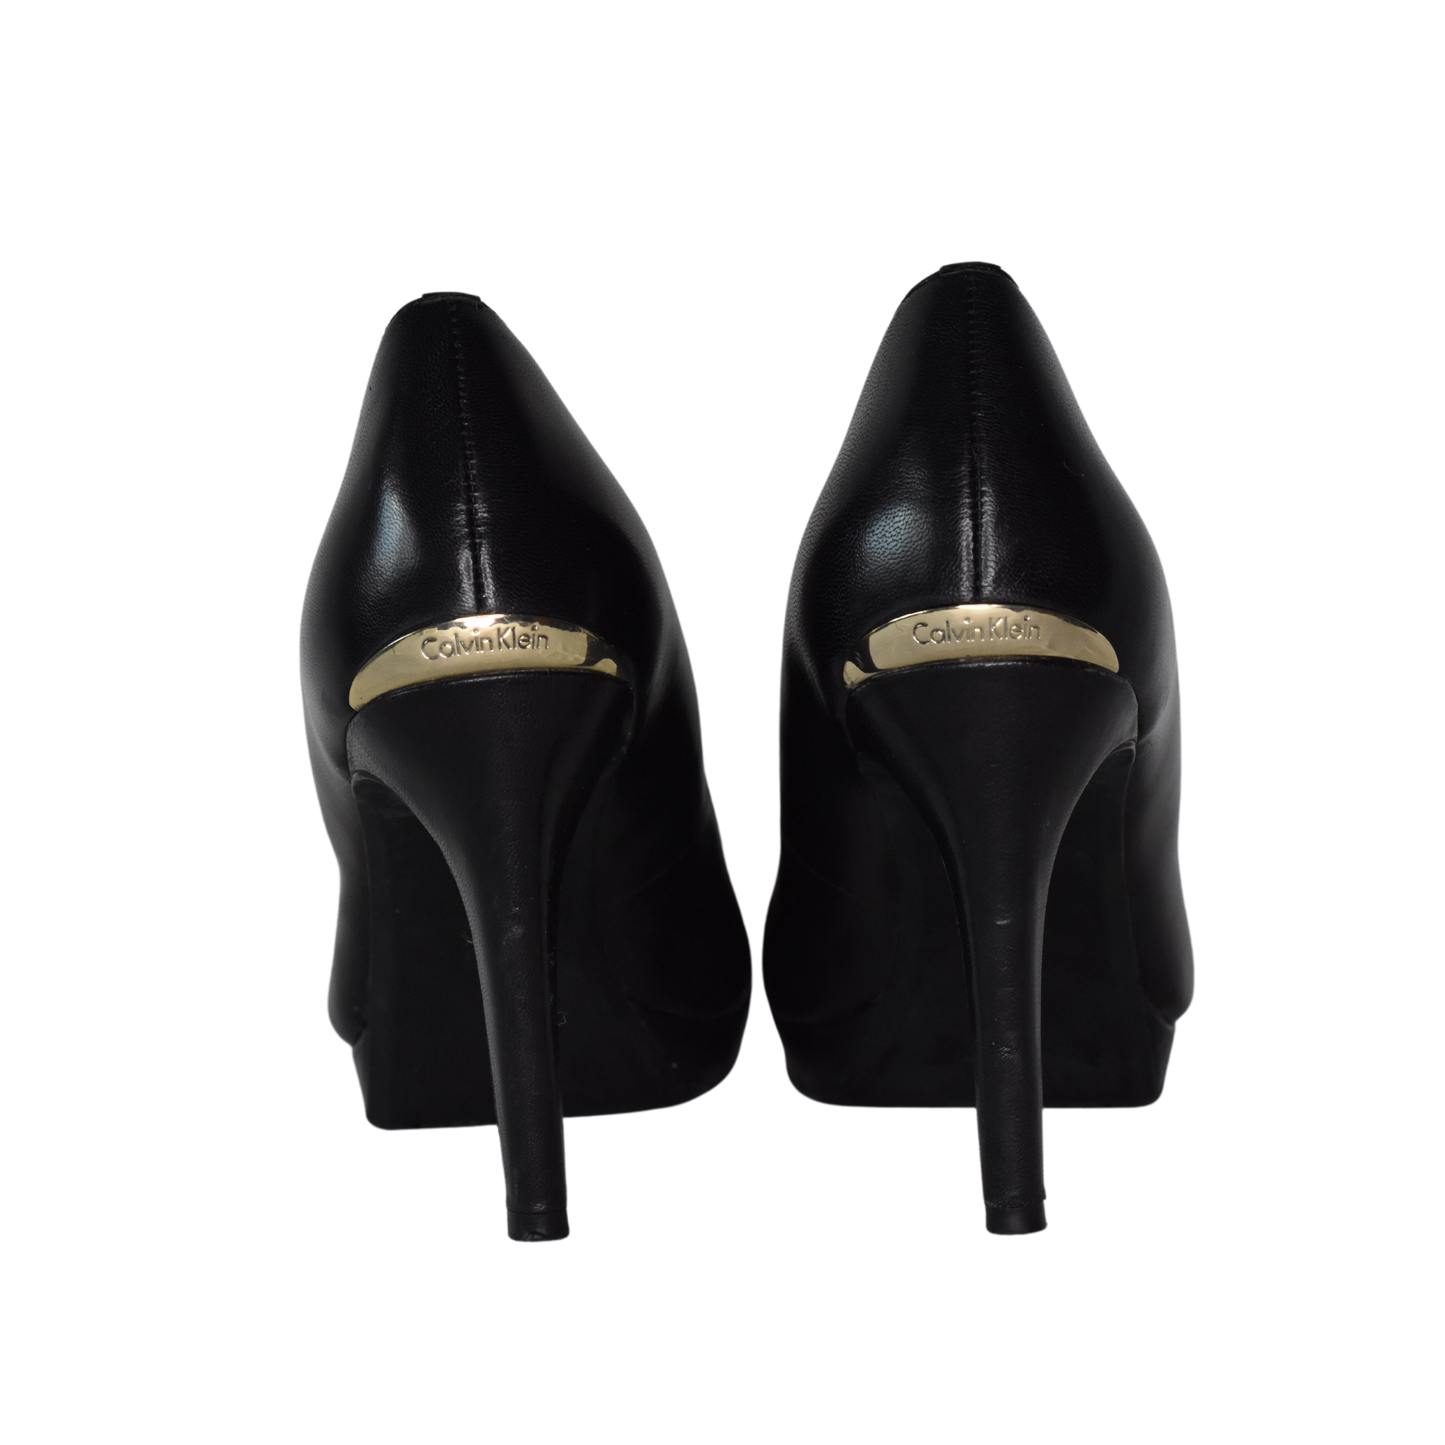 Calvin Klein High Heel Pumps w Gold Detail Black Size 8 SKU 000281-9